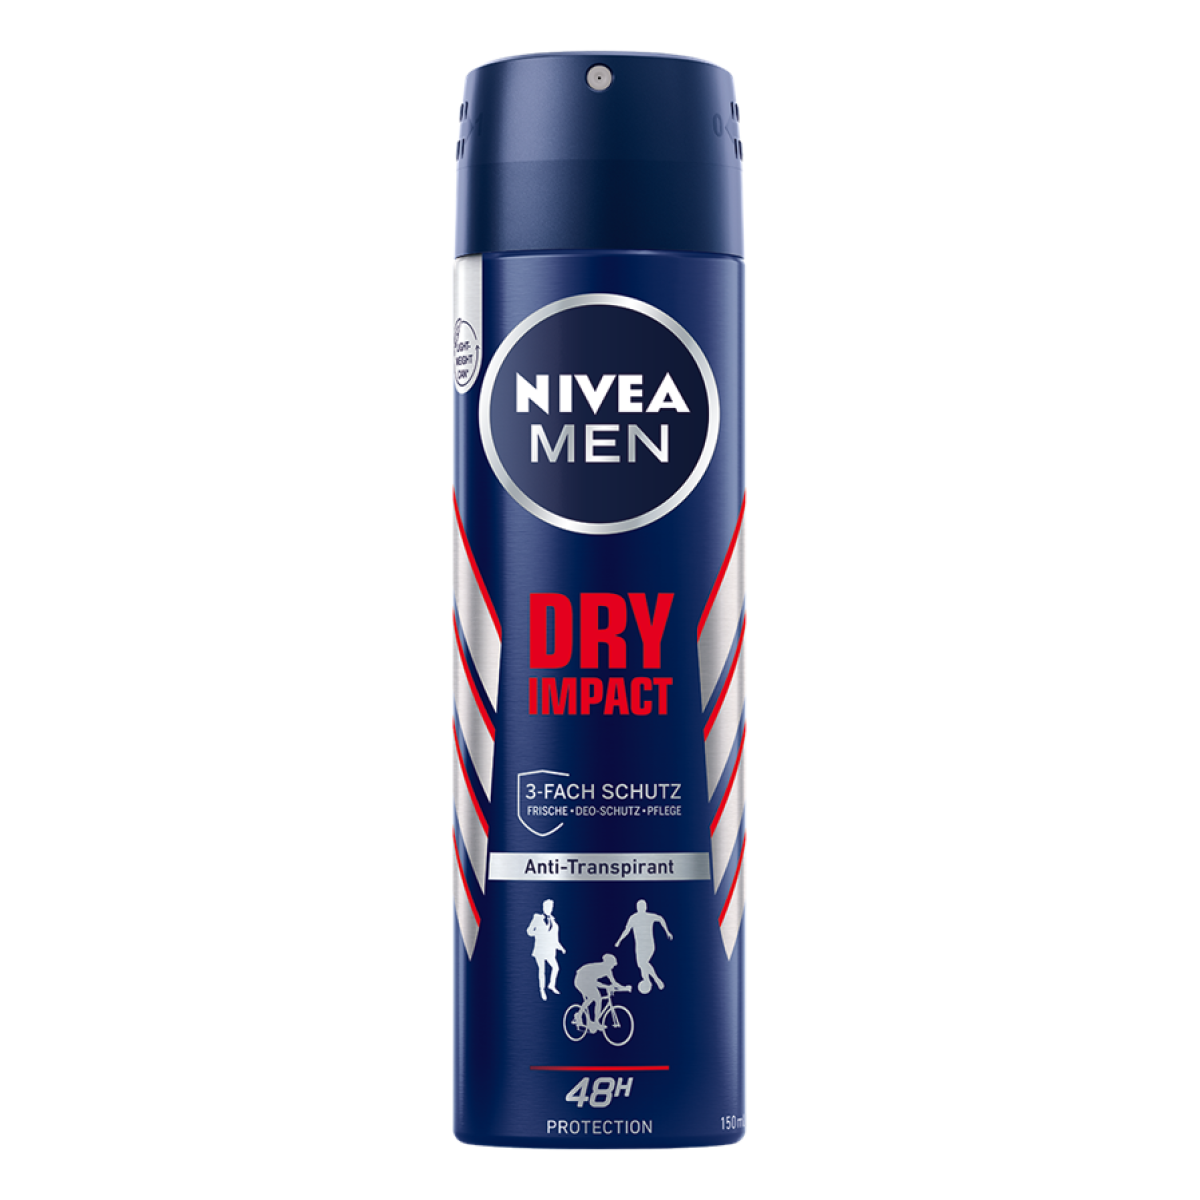 Primary image of Dry Impact Deodorant Spray for Men